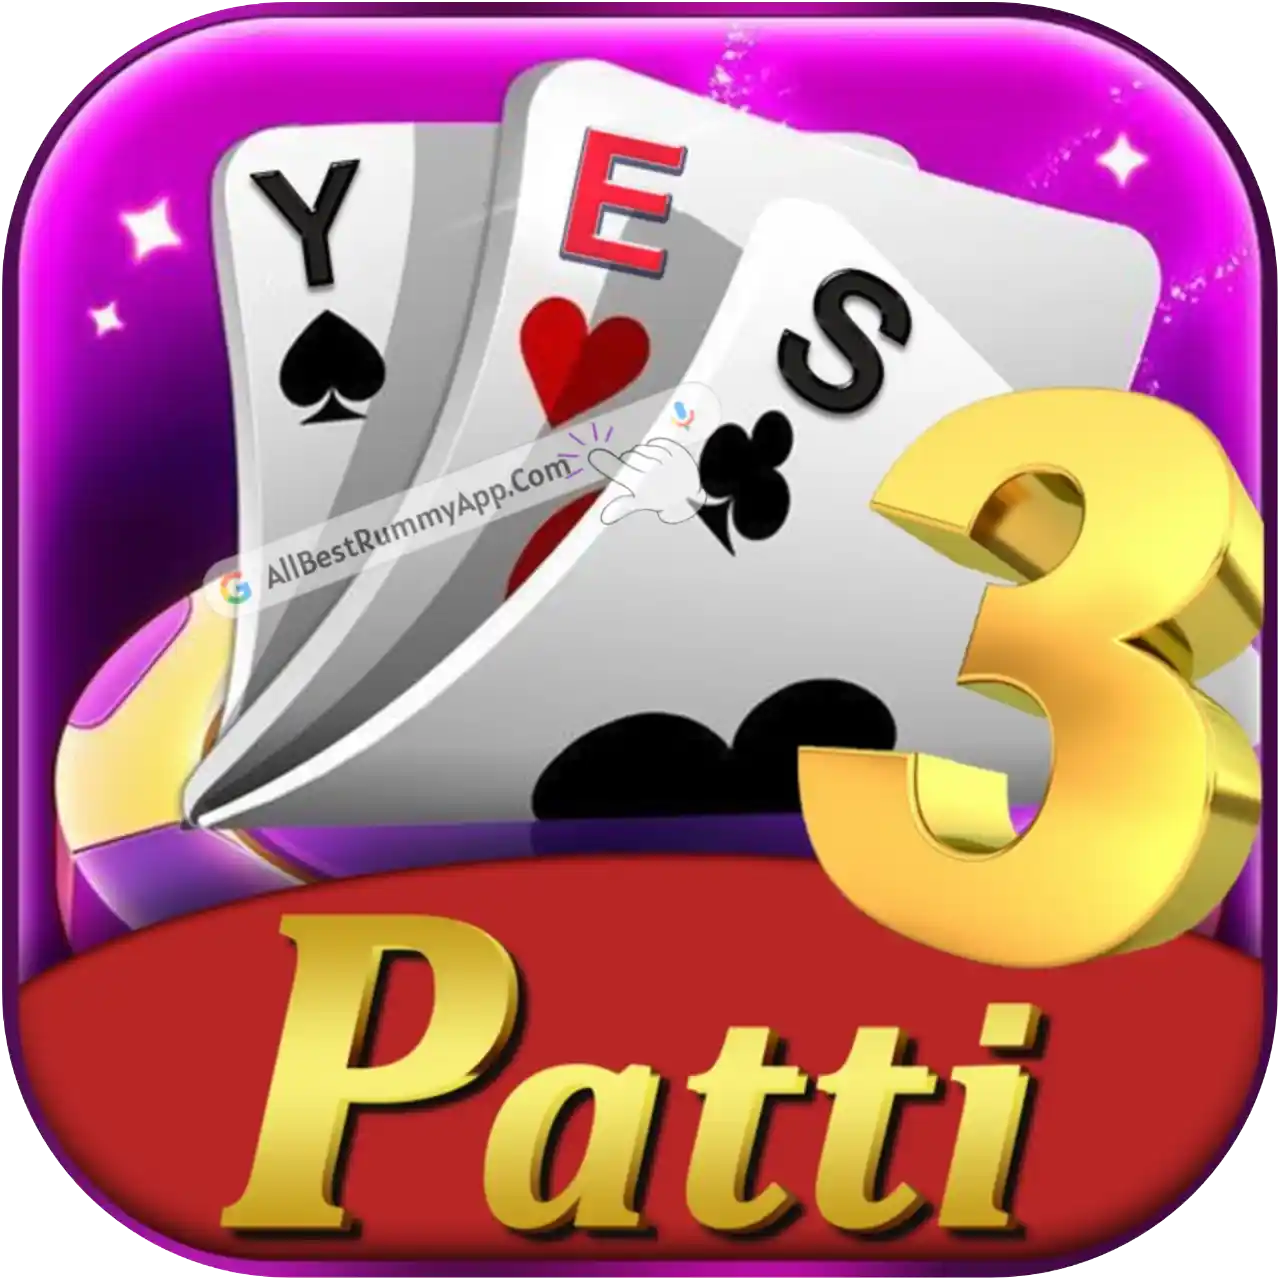 Yes 3 Patti - All Best Rummy App